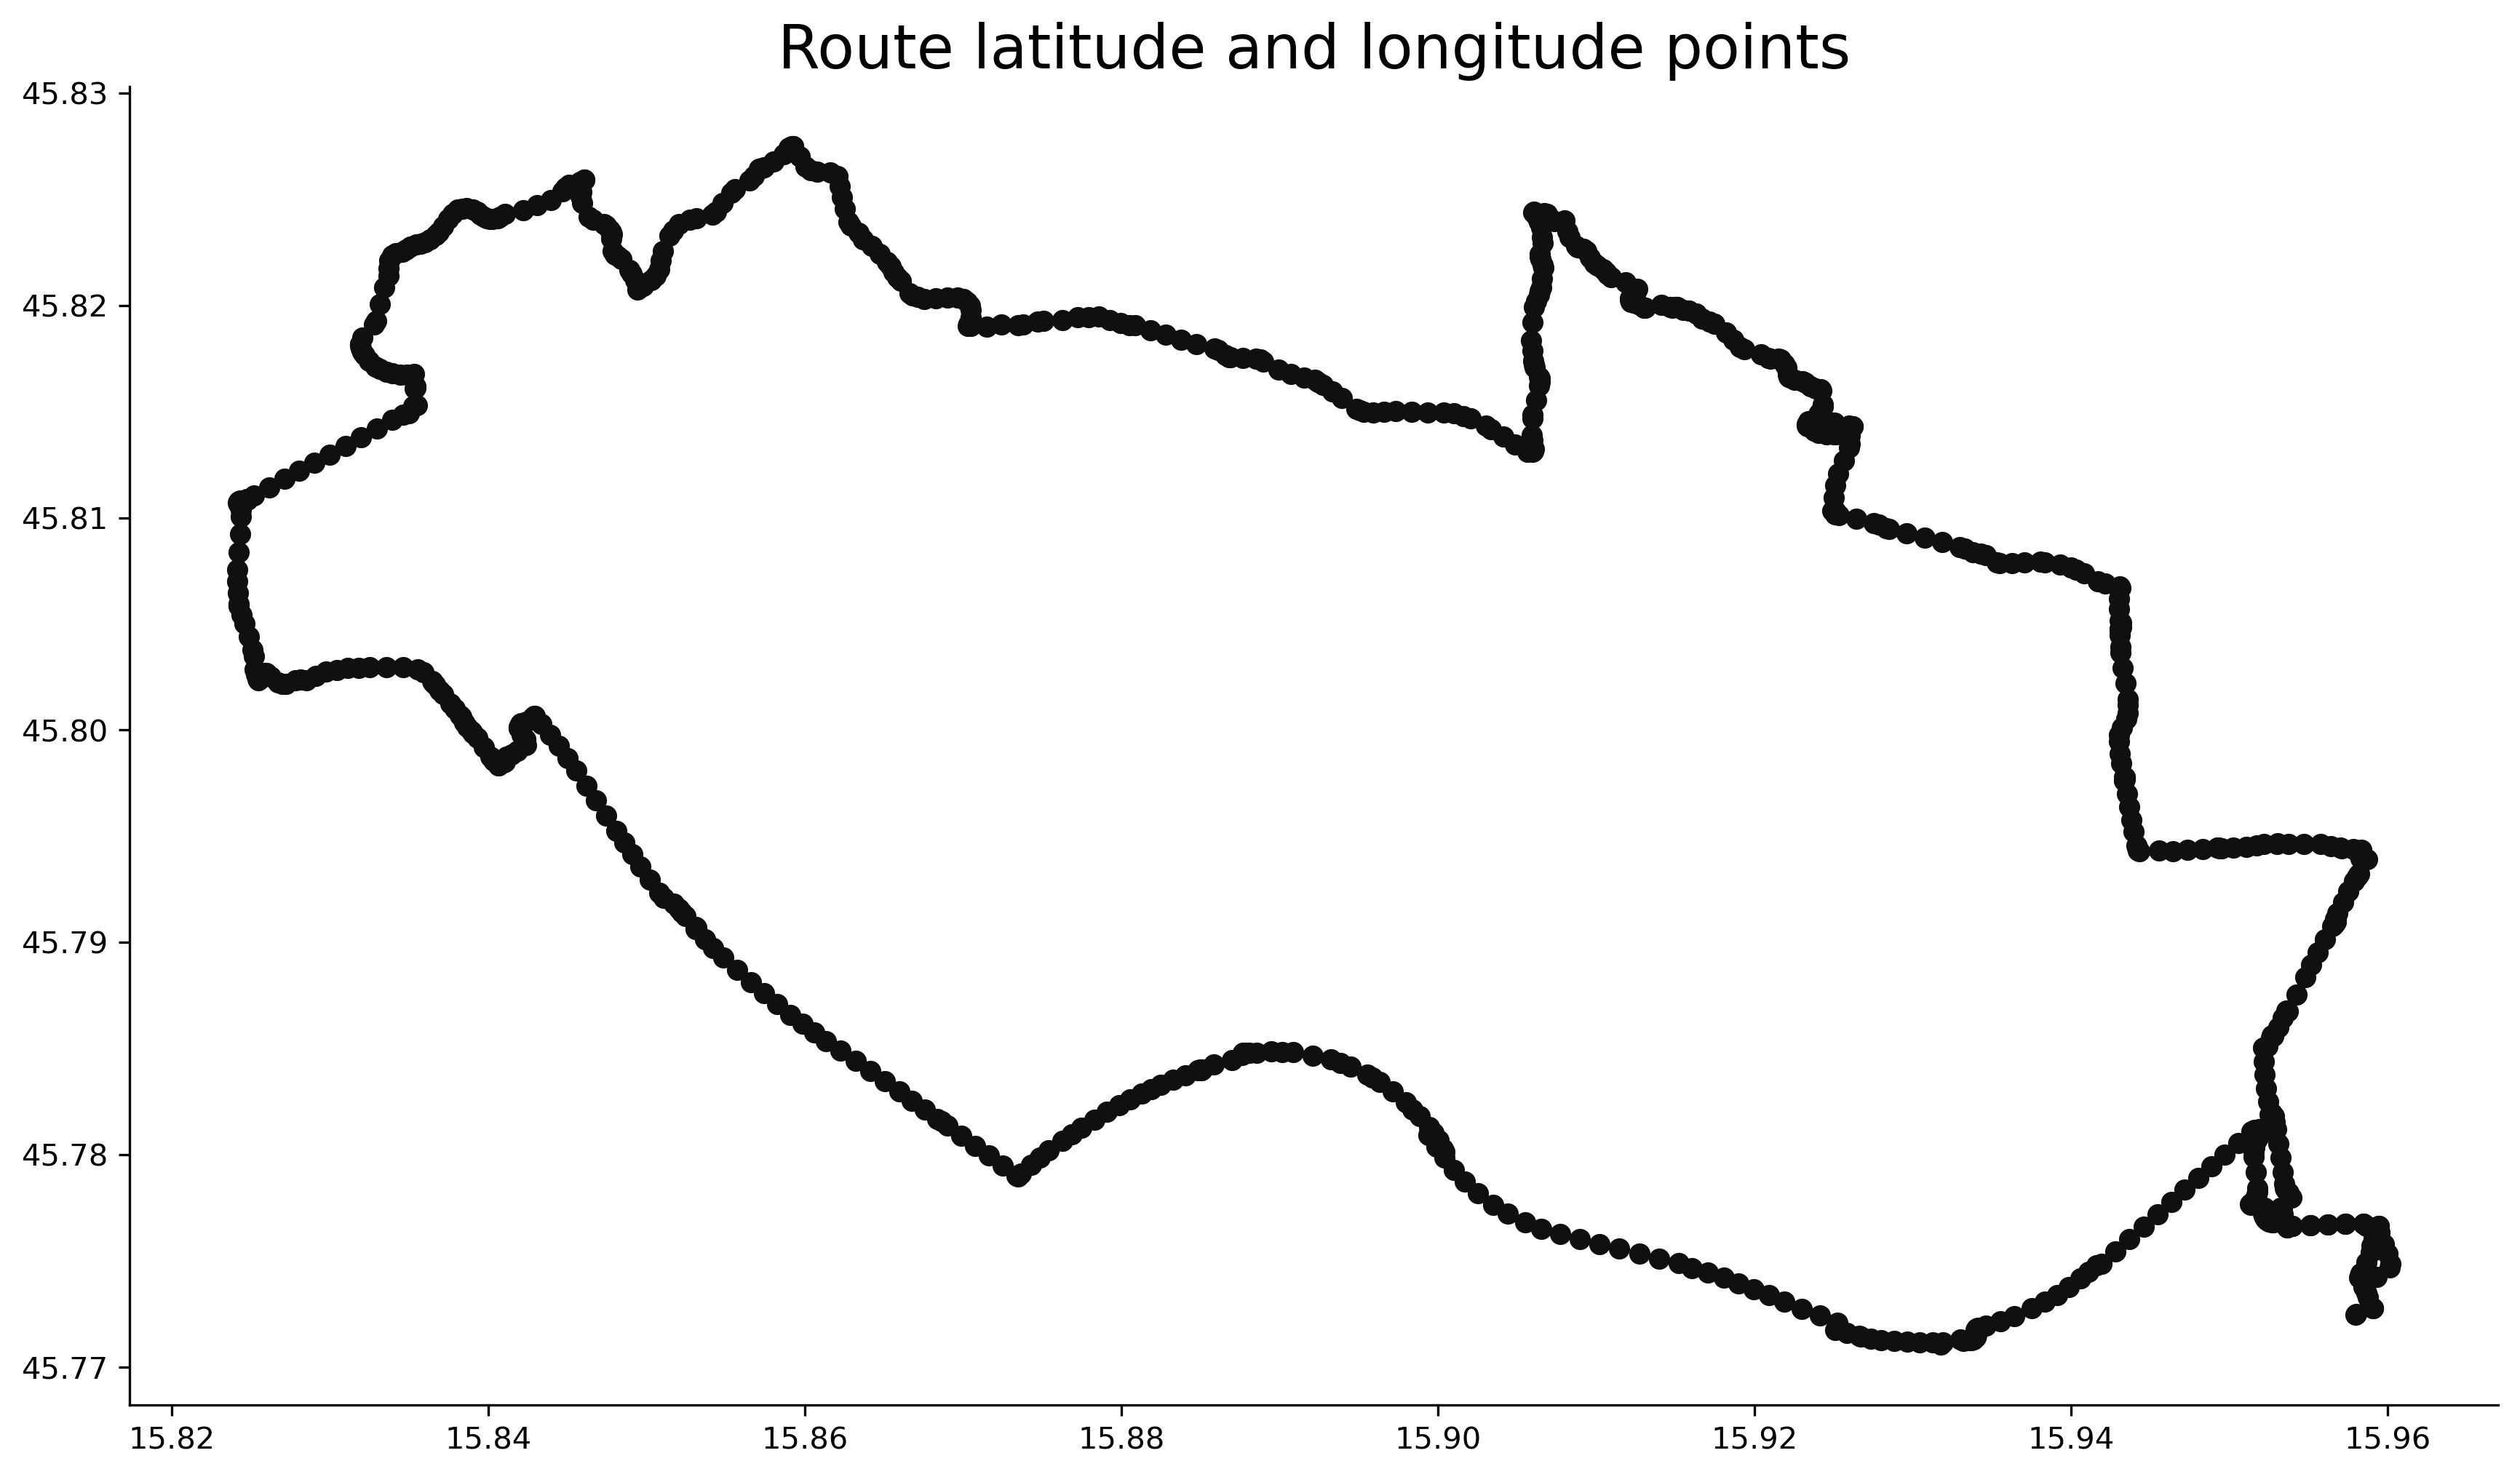 Image 2 - Strava route visualization with Matplotlib (image by author)